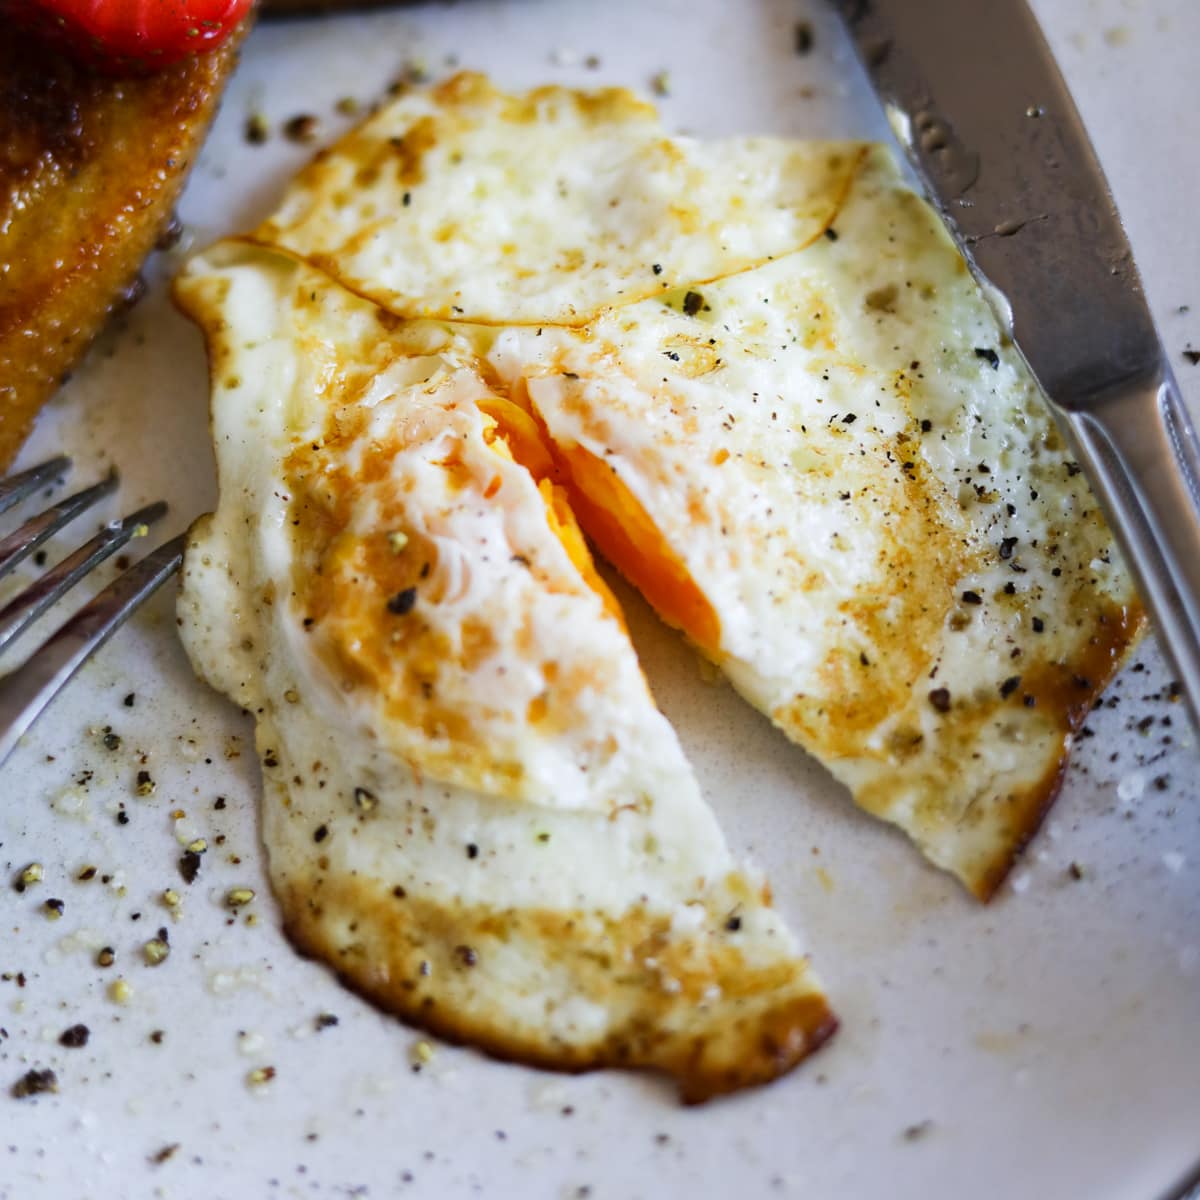 Easy Over-Medium Eggs